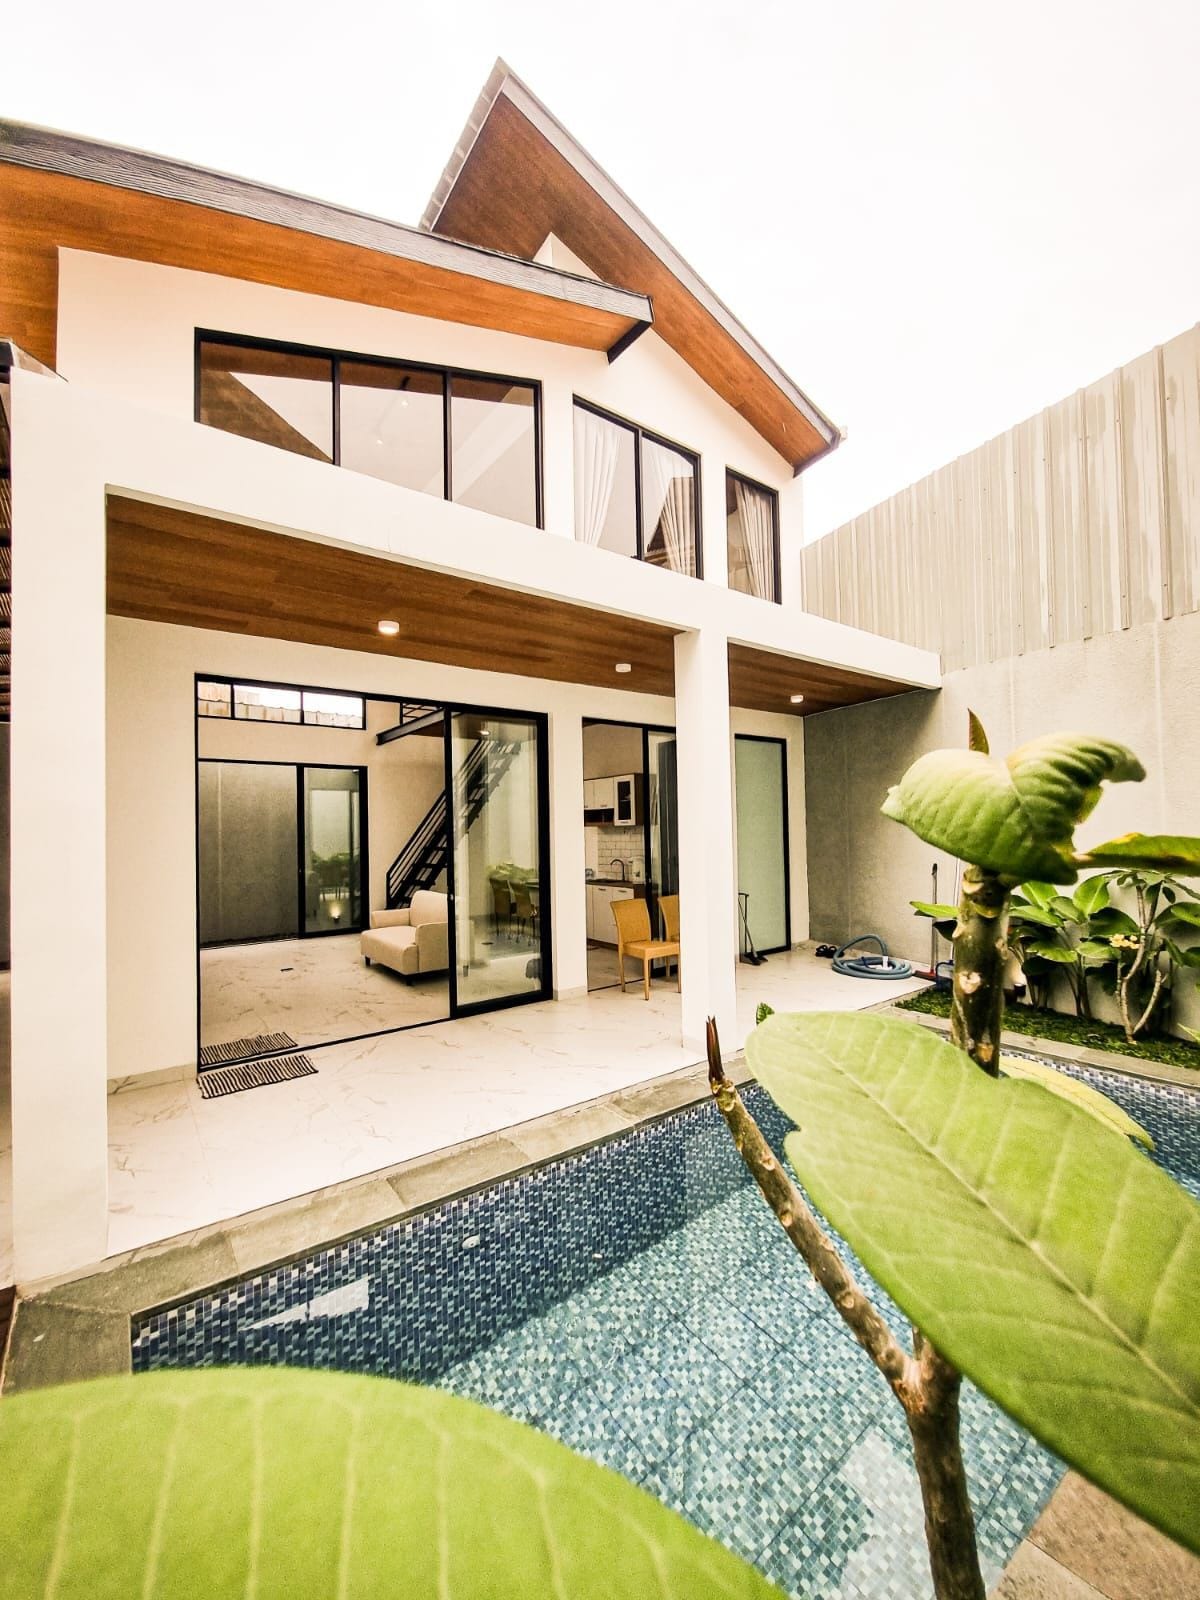 Rumah villa rasa Bali di tengah kota Bandung